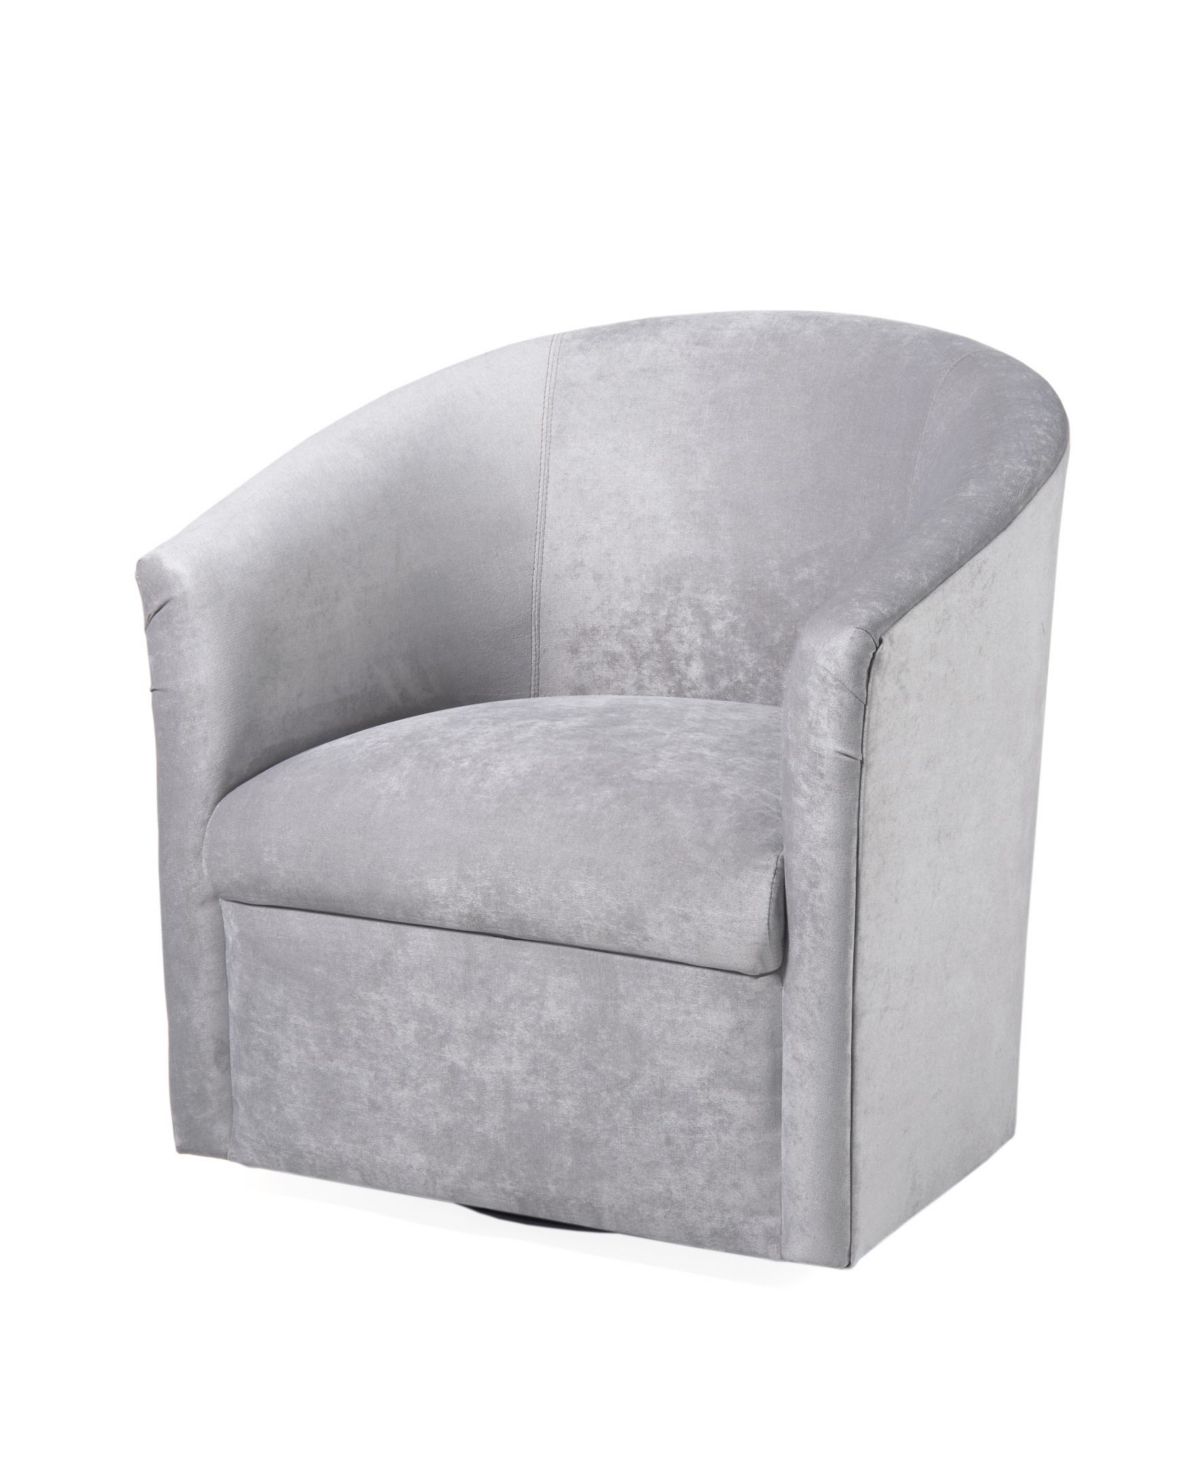 Comfort Pointe Elizabeth Swivel Chair In Silver-tone